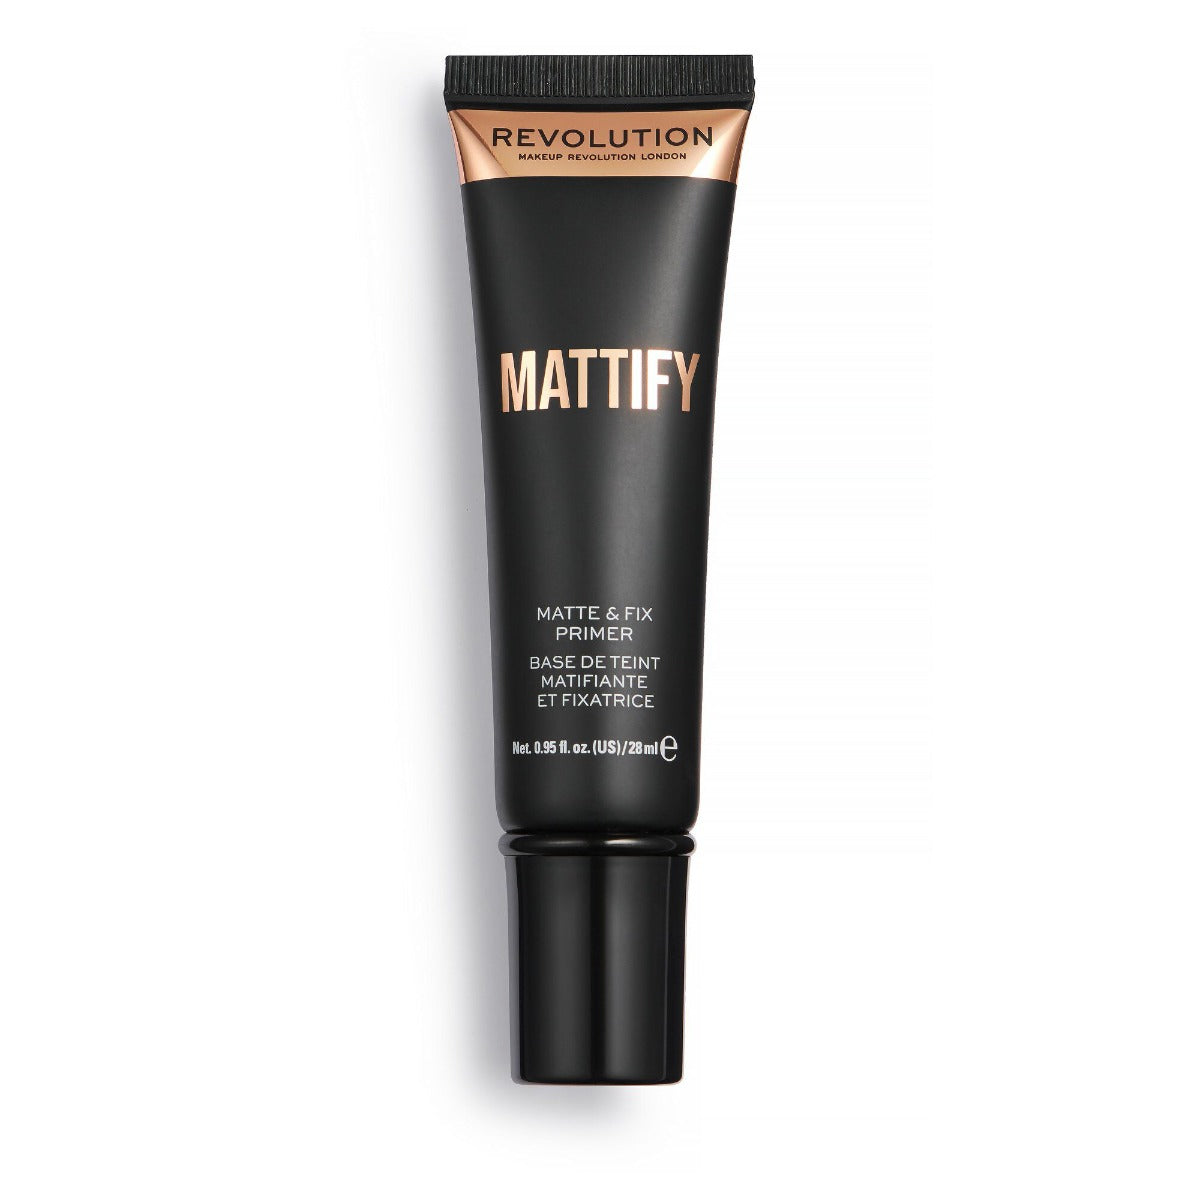 Makeup Revolution Mattify Primer (28ml)